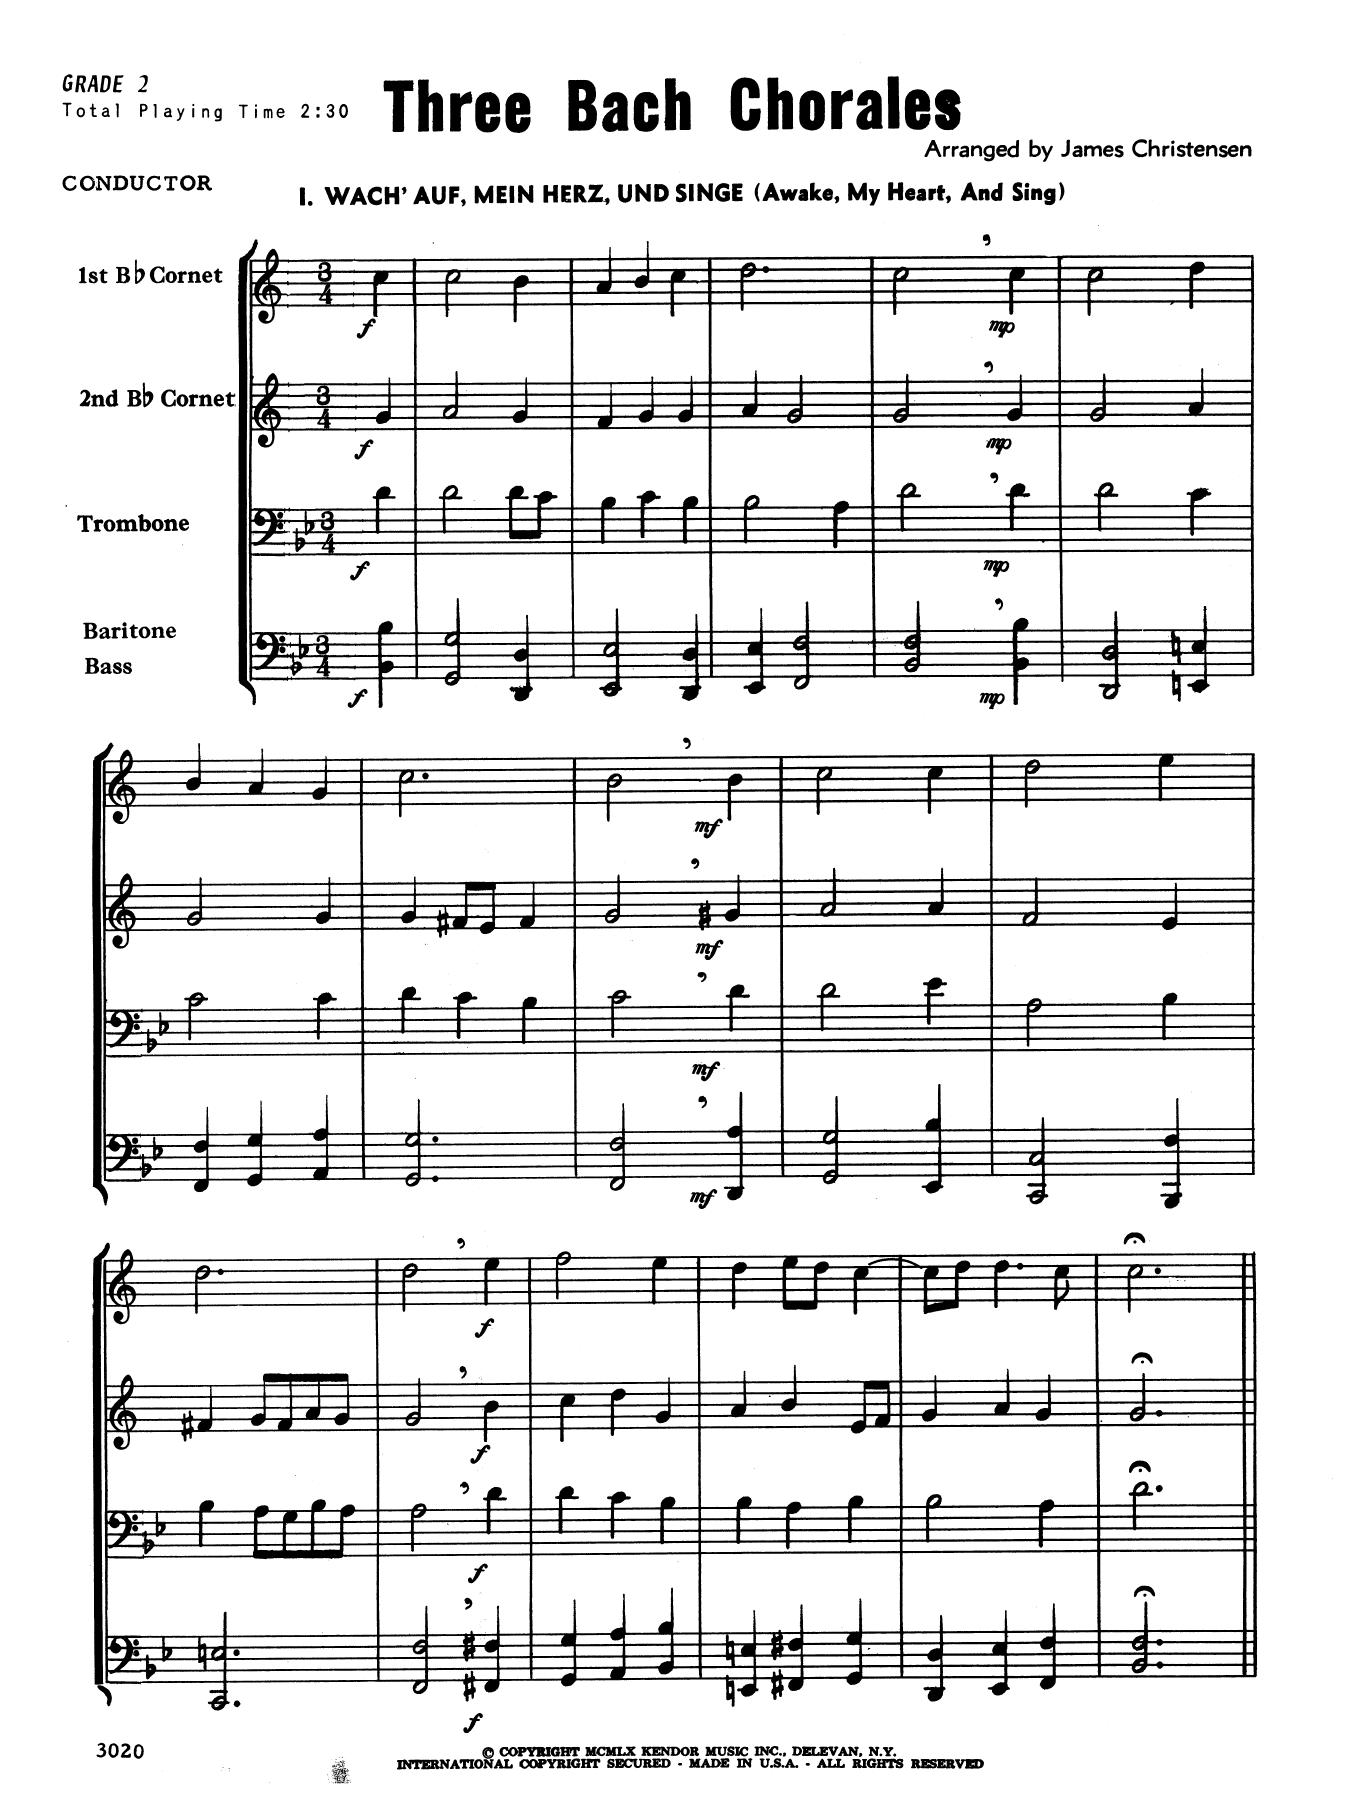 Download James Christensen Three Bach Chorales - Full Score Sheet Music